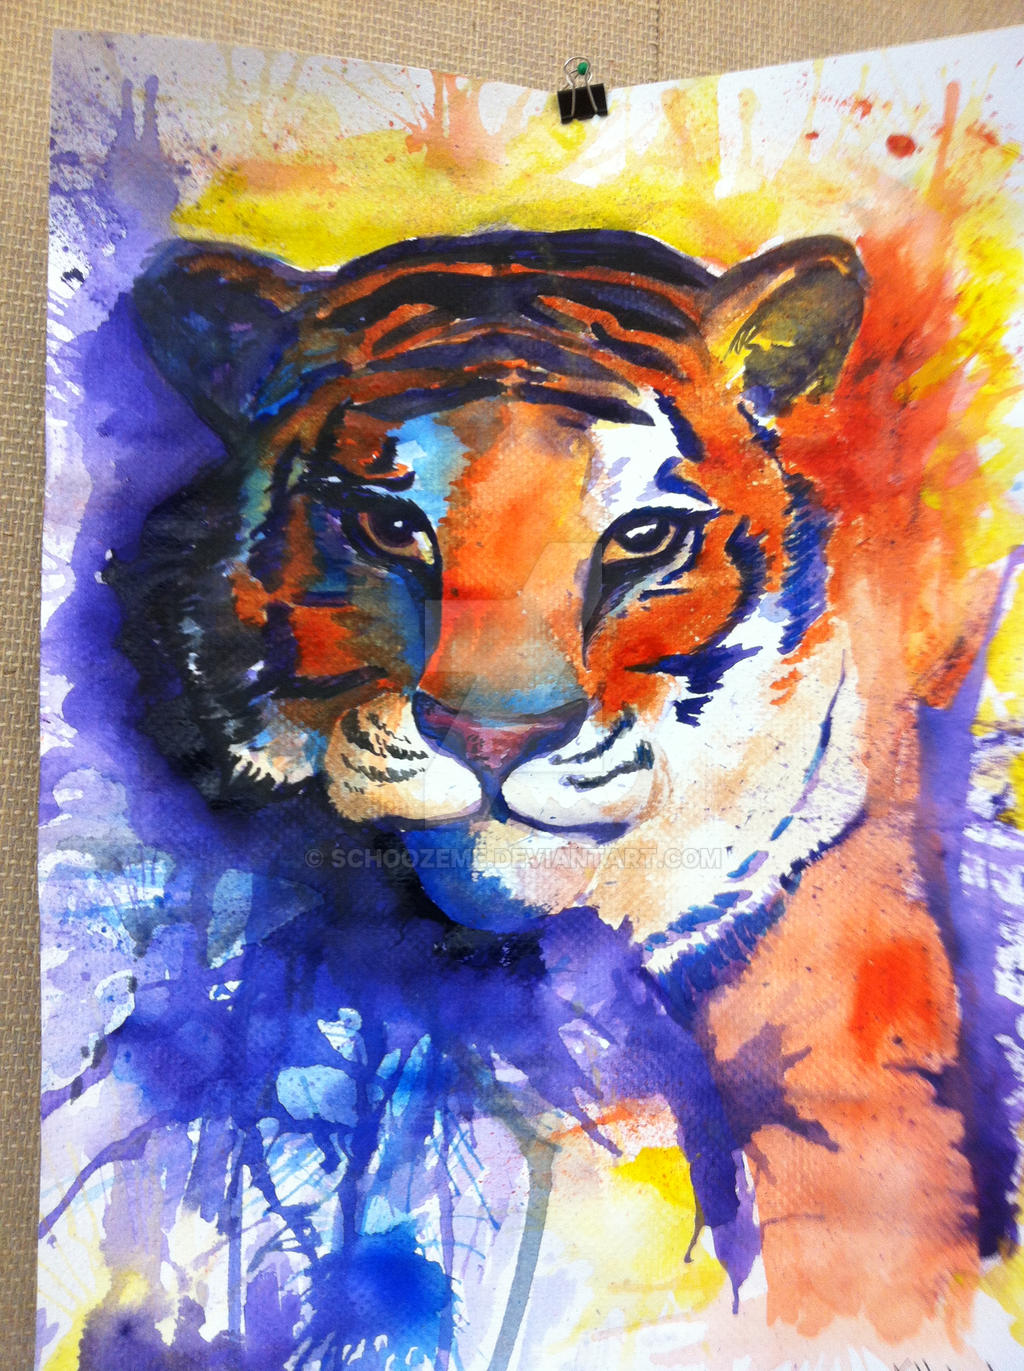 Tiger Rising Prints by schoozeme on DeviantArt